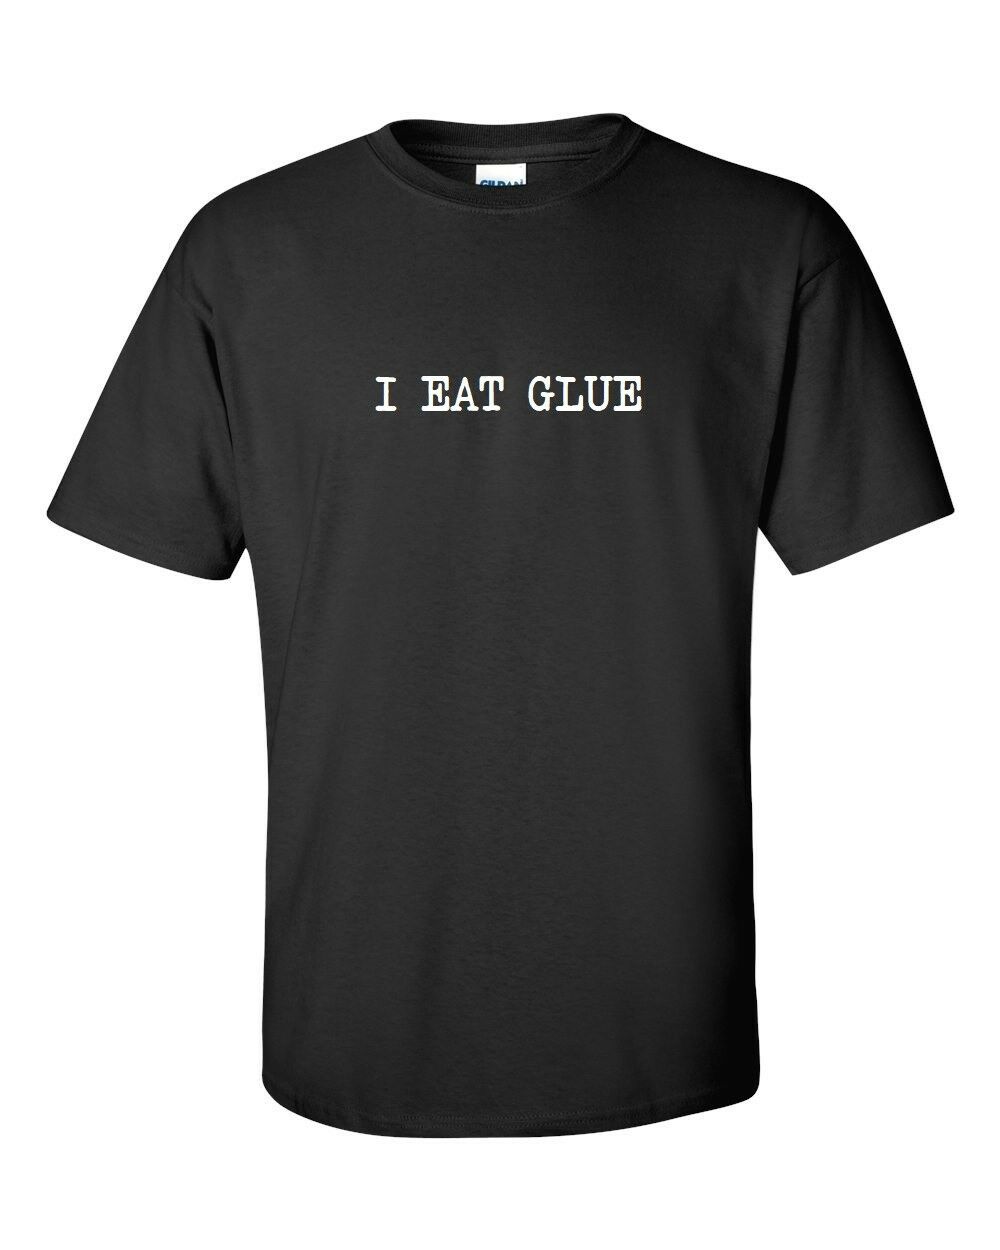 I Eat Glue! T-shirt Funny Hilarious Party Sarcastic Geek Nerd Black White Shirt